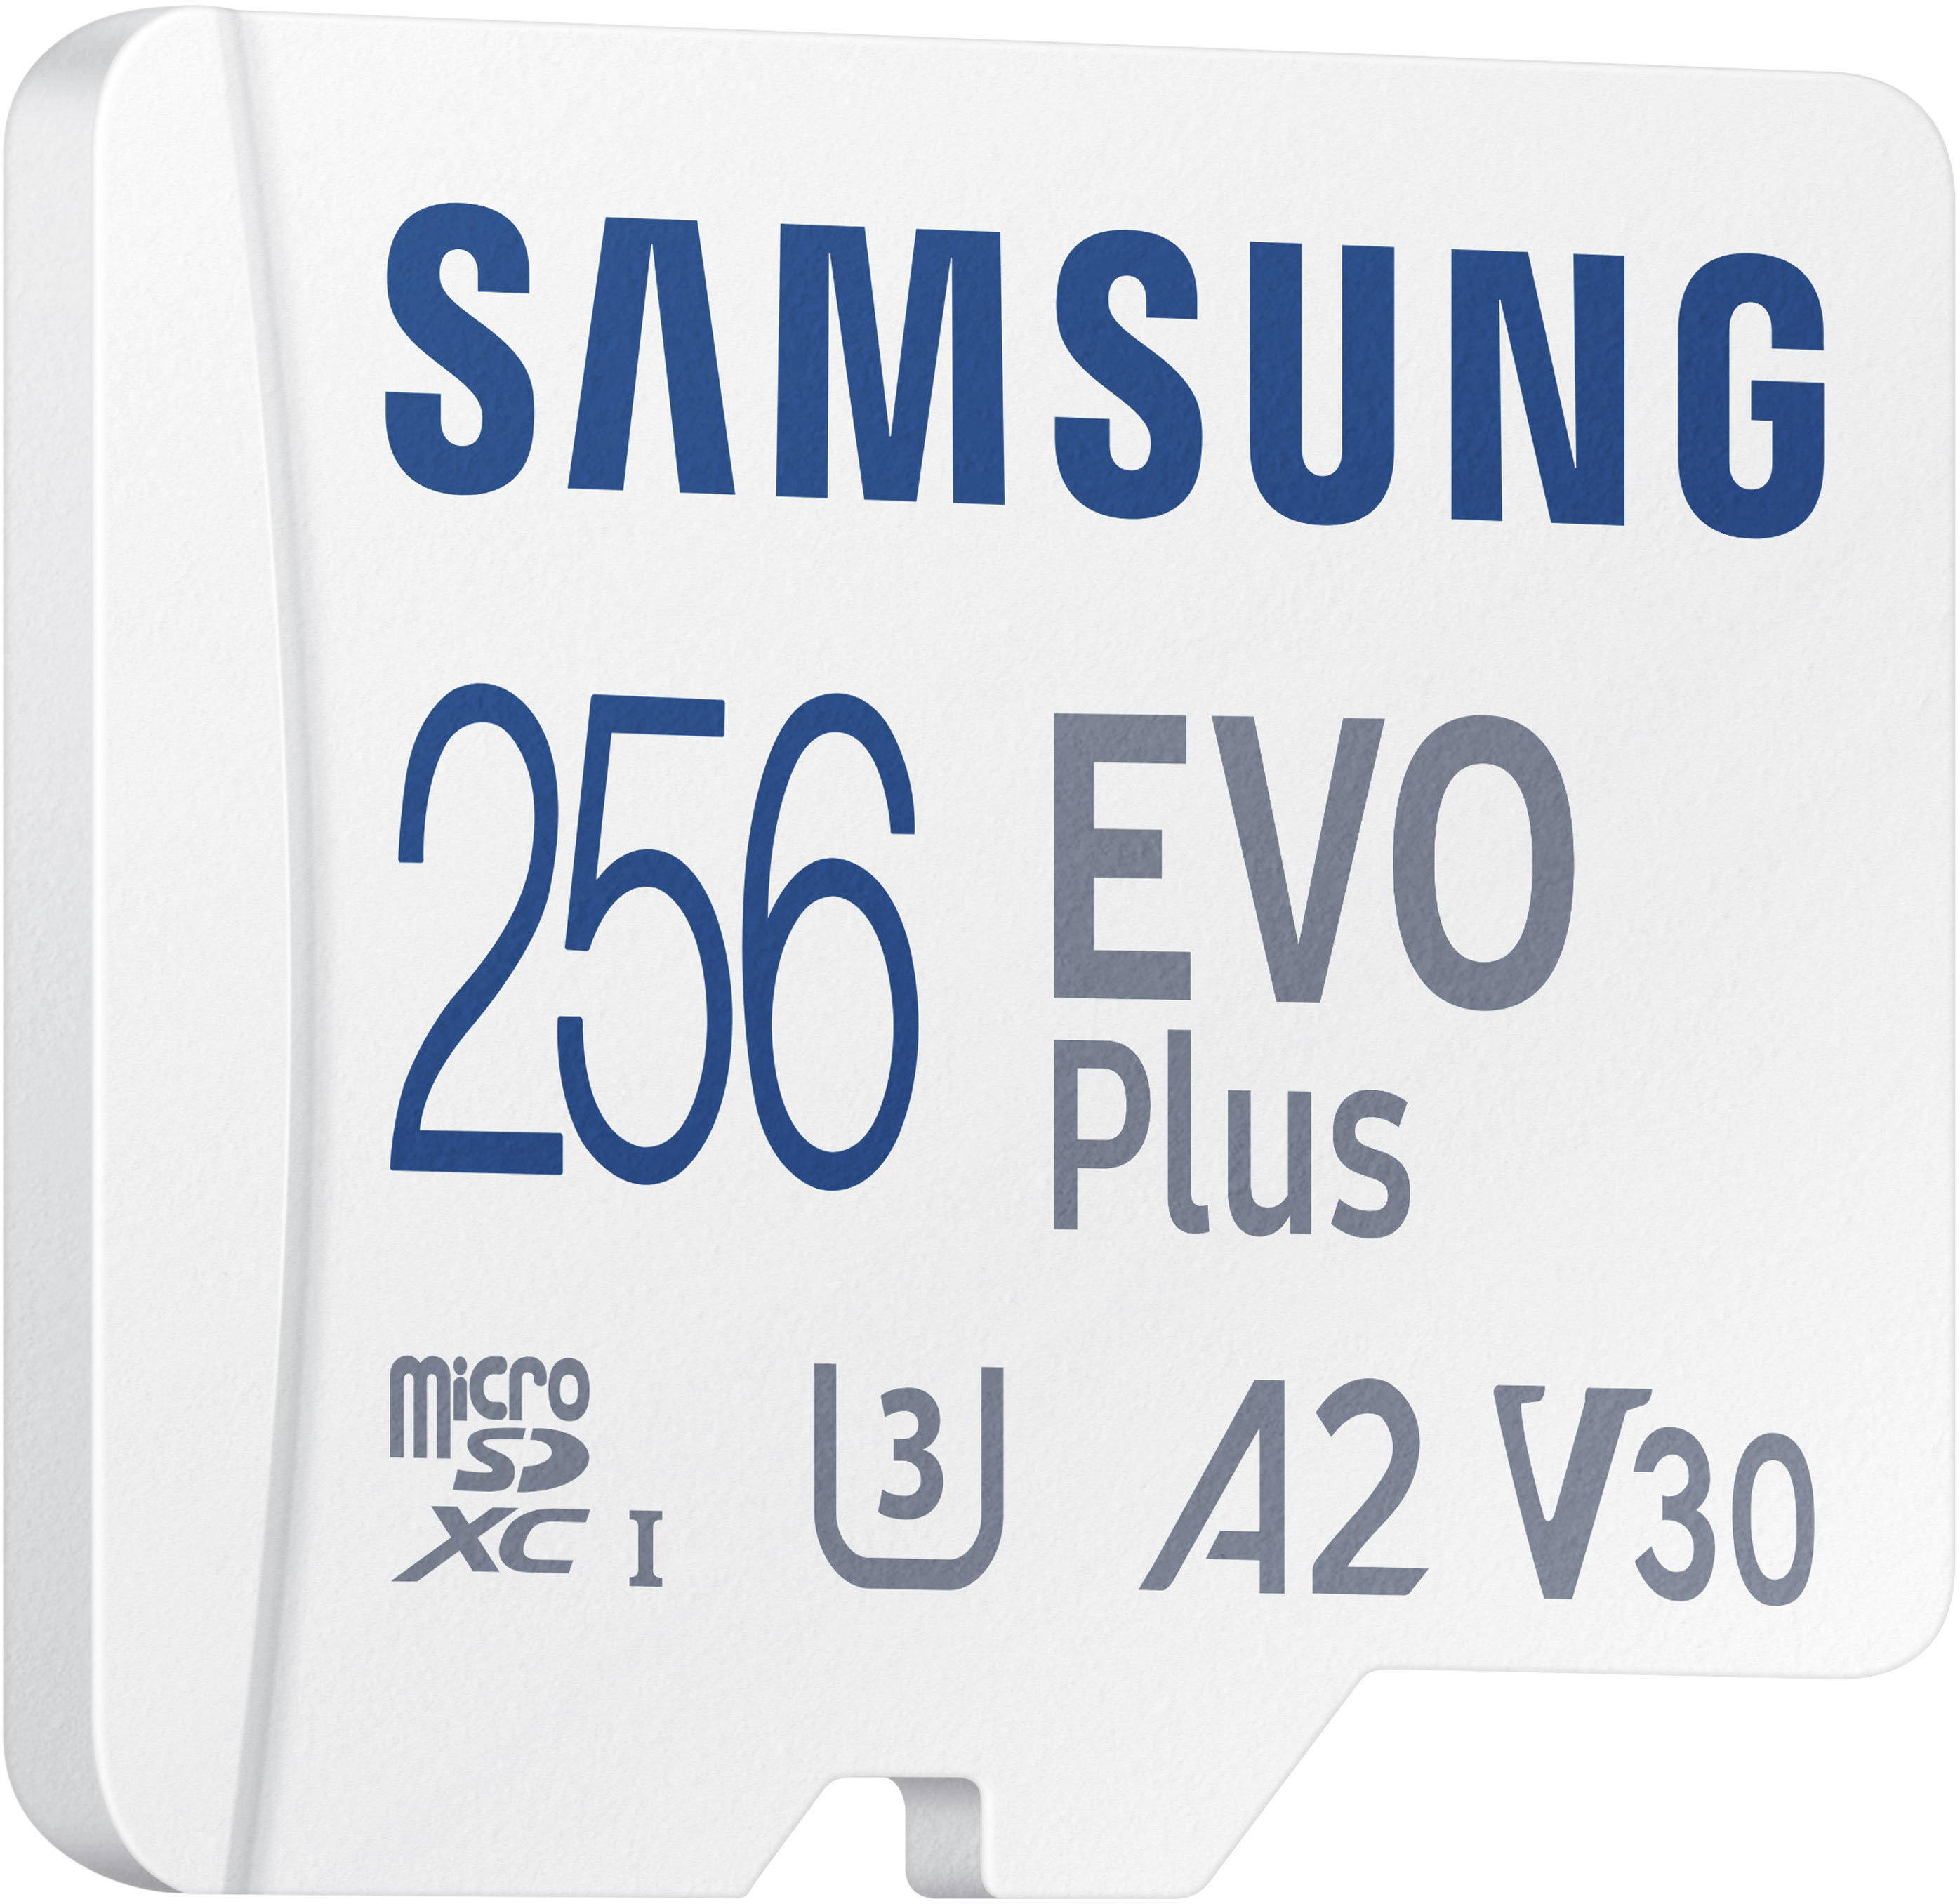 Samsung 256GB EVO Plus Class 10 UHS-I microSDXC U3 with Adapter (MB-MC256GA)